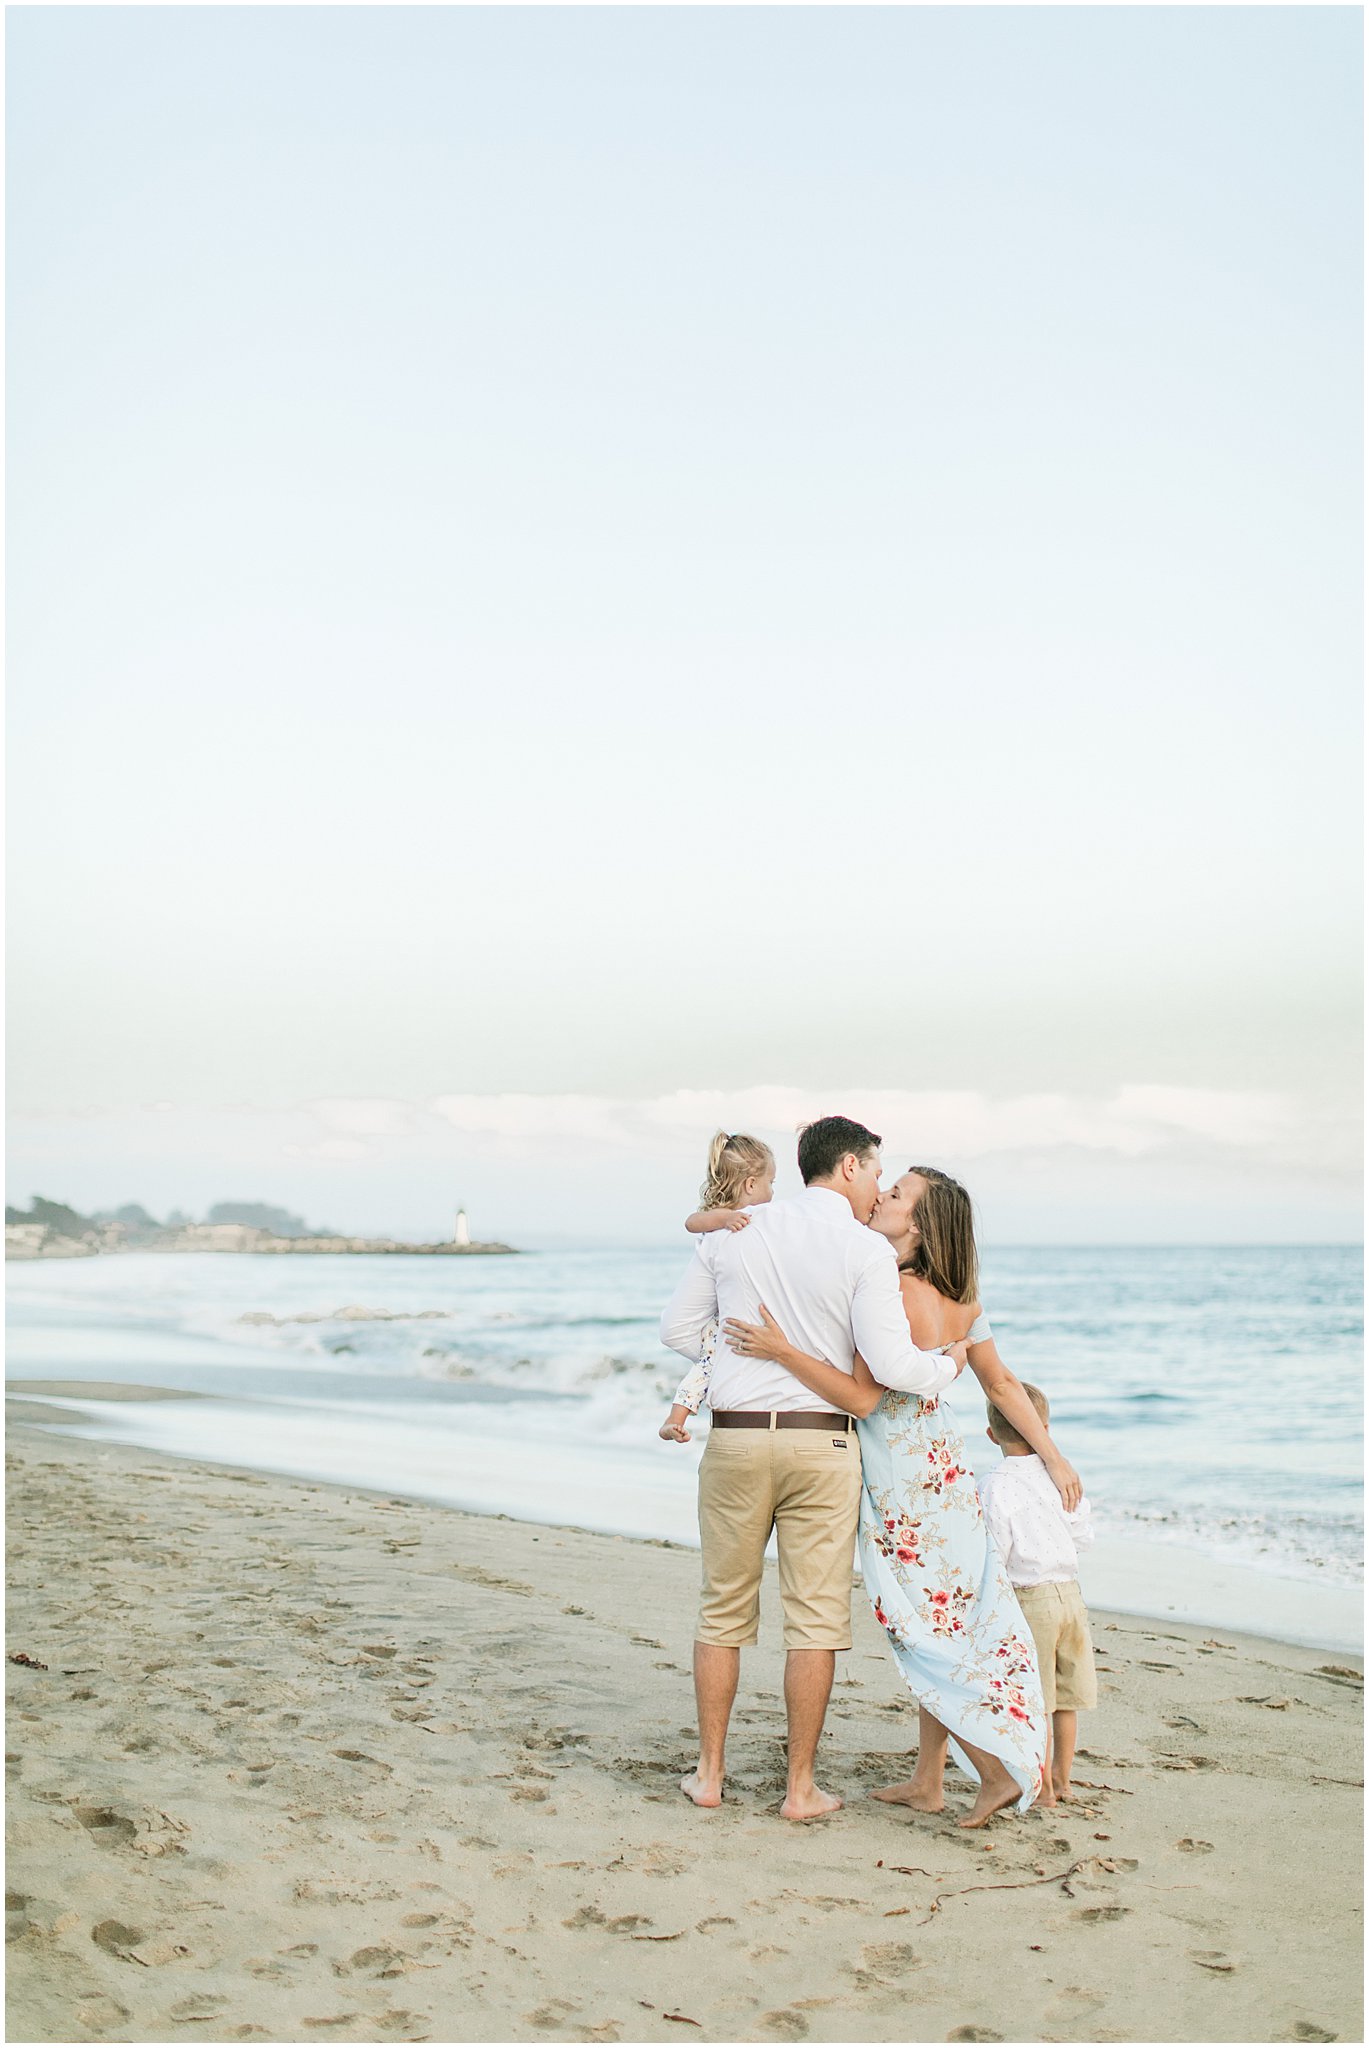 santa cruz beach family portrait session california wedding photographer angela sue photography_0021.jpg